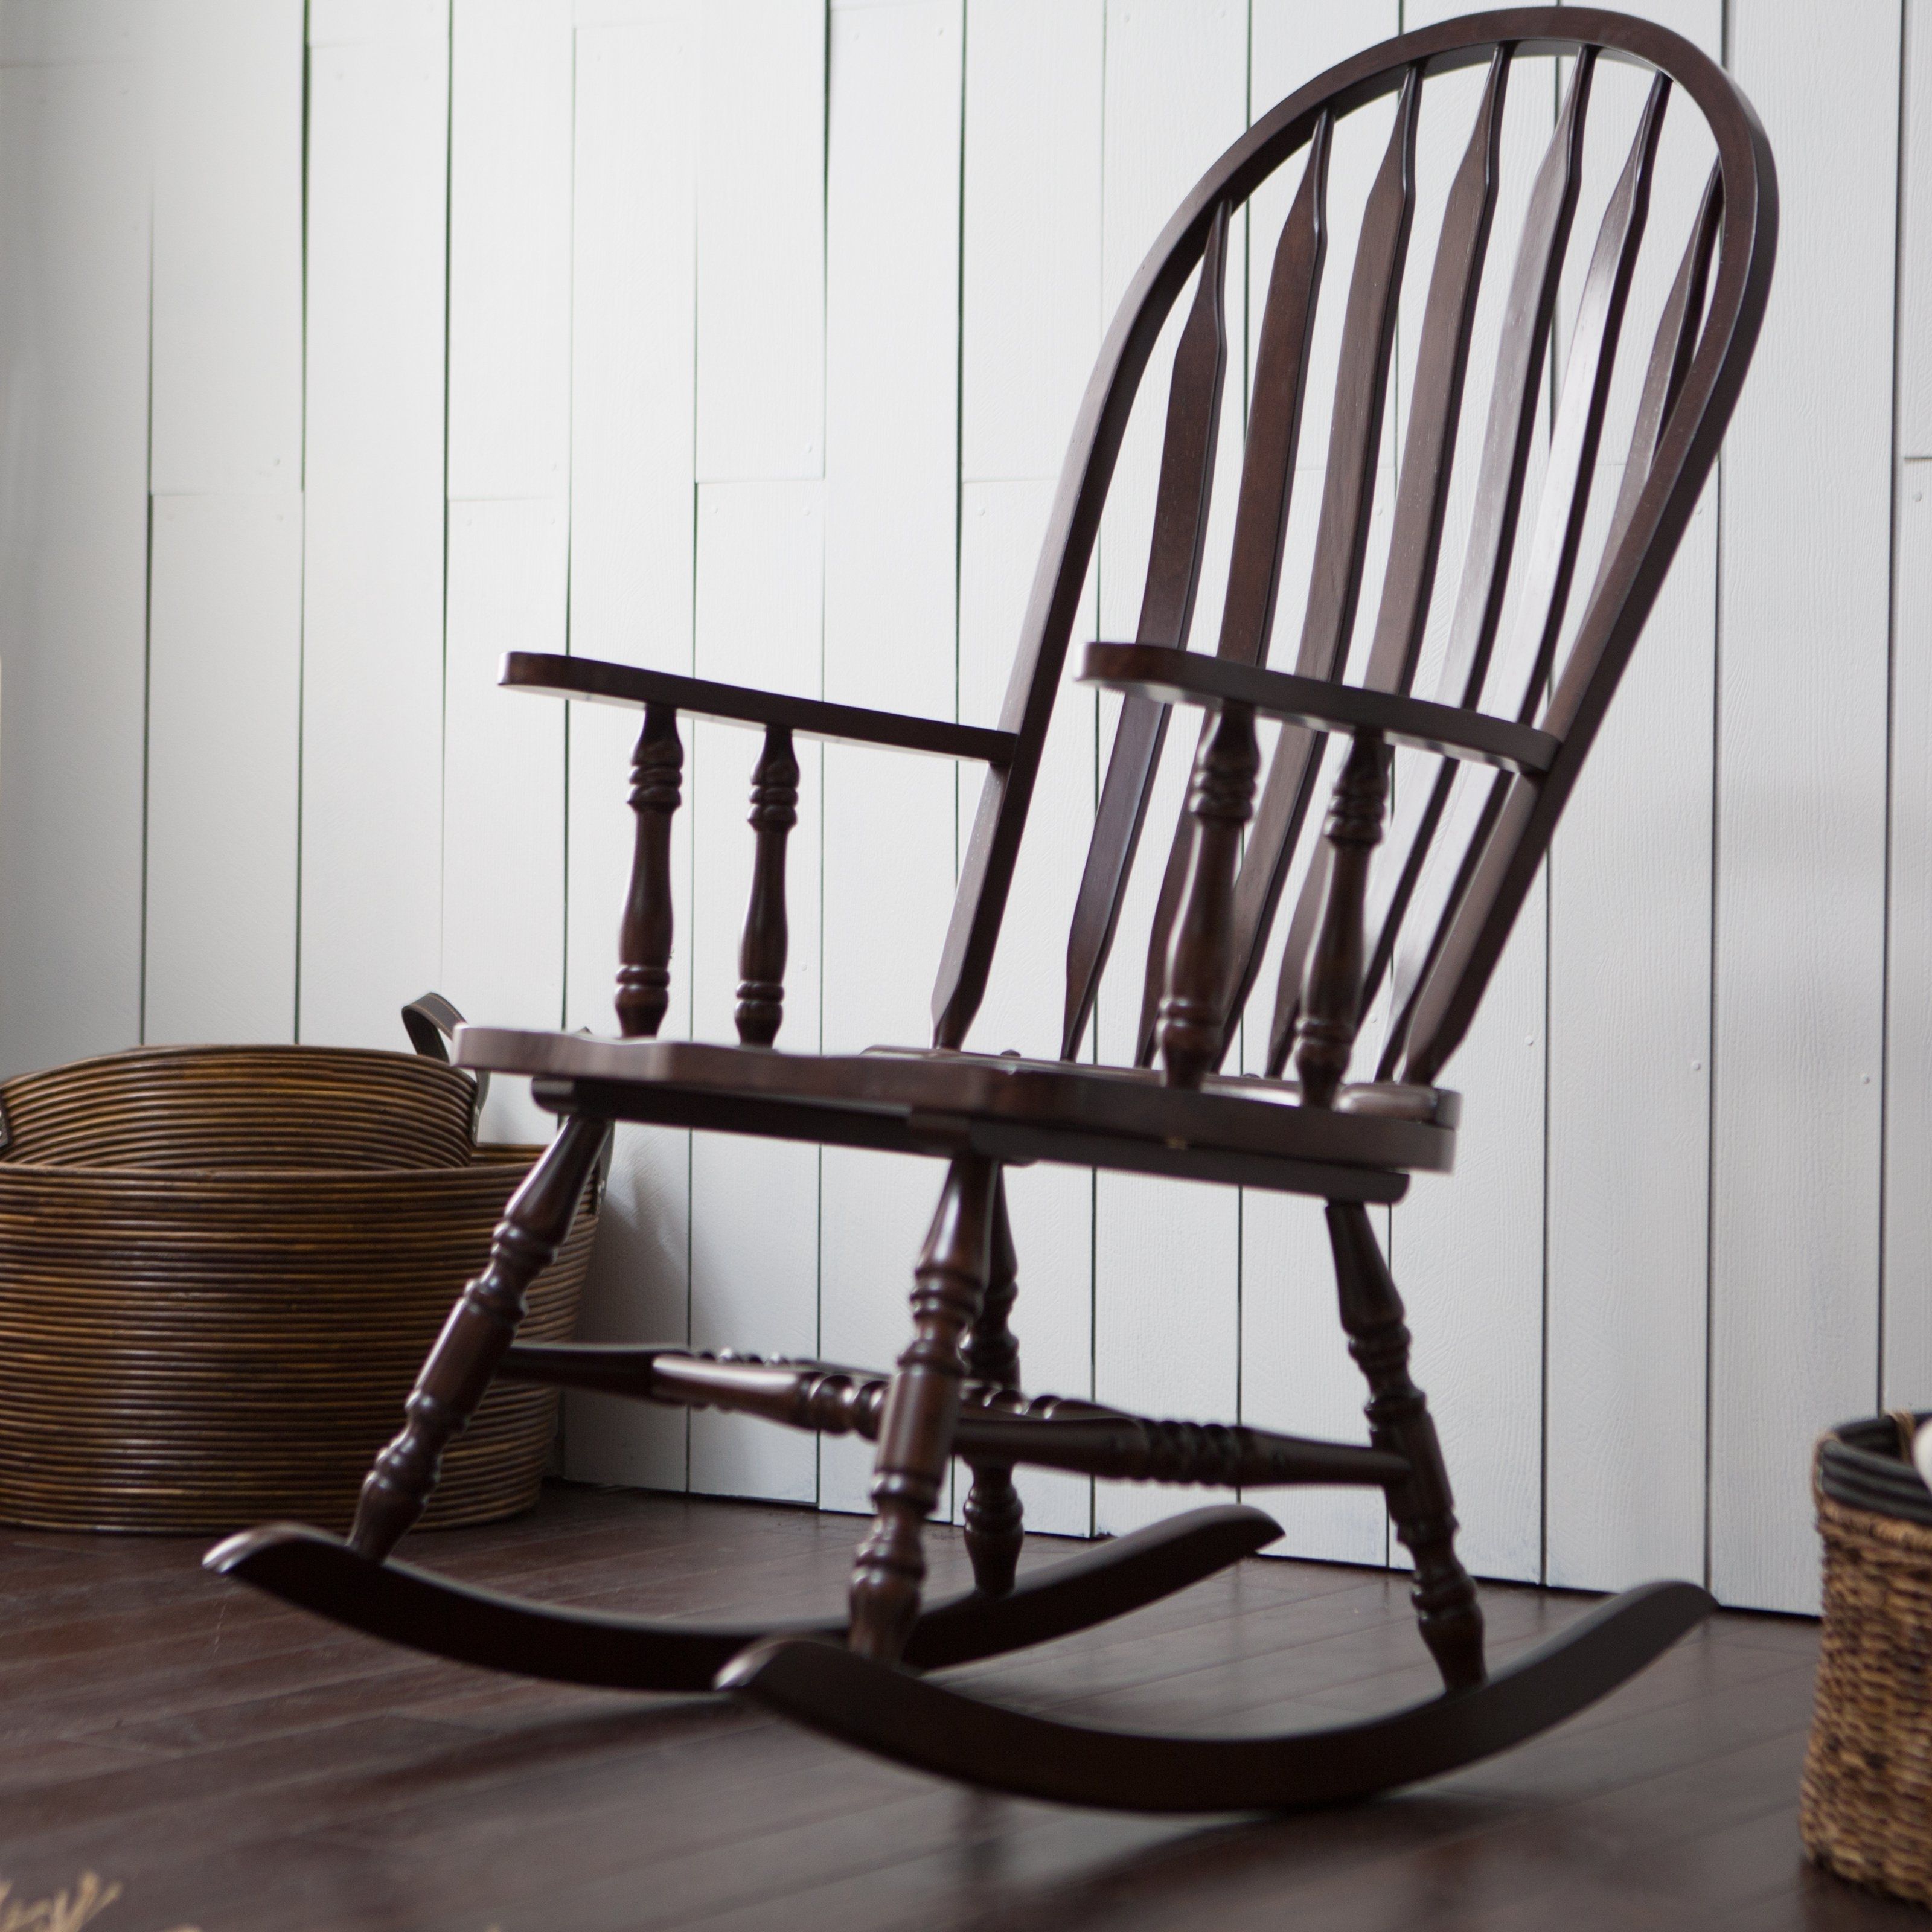 Belham Living Windsor Indoor Wood Rocking Chair – Espresso | Hayneedle For Rocking Chairs (View 6 of 15)